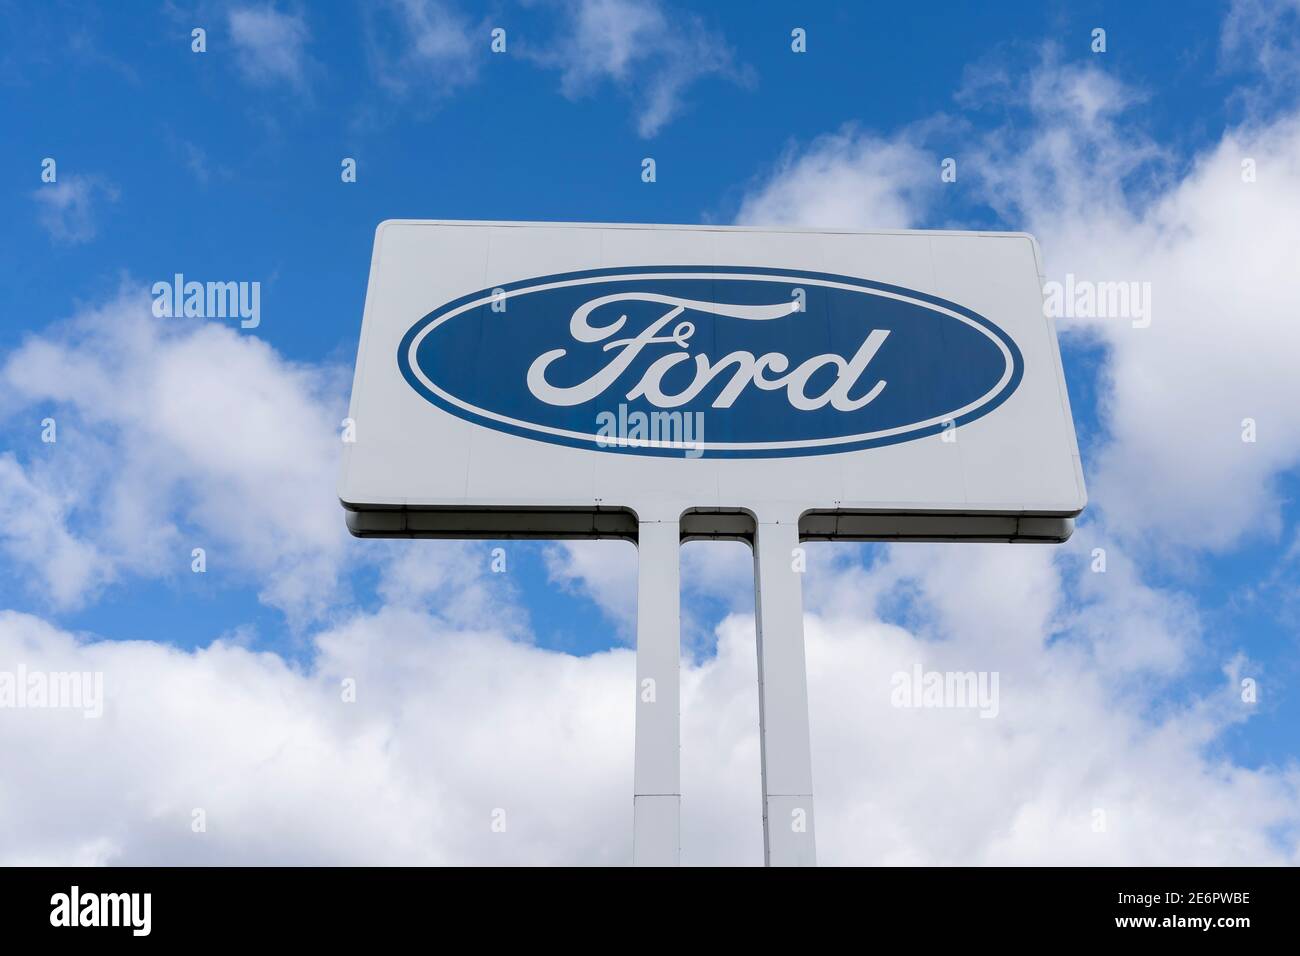 Brampton, Ontario, Canada - 8 octobre 2020 : fermer le panneau Ford Ground. Banque D'Images